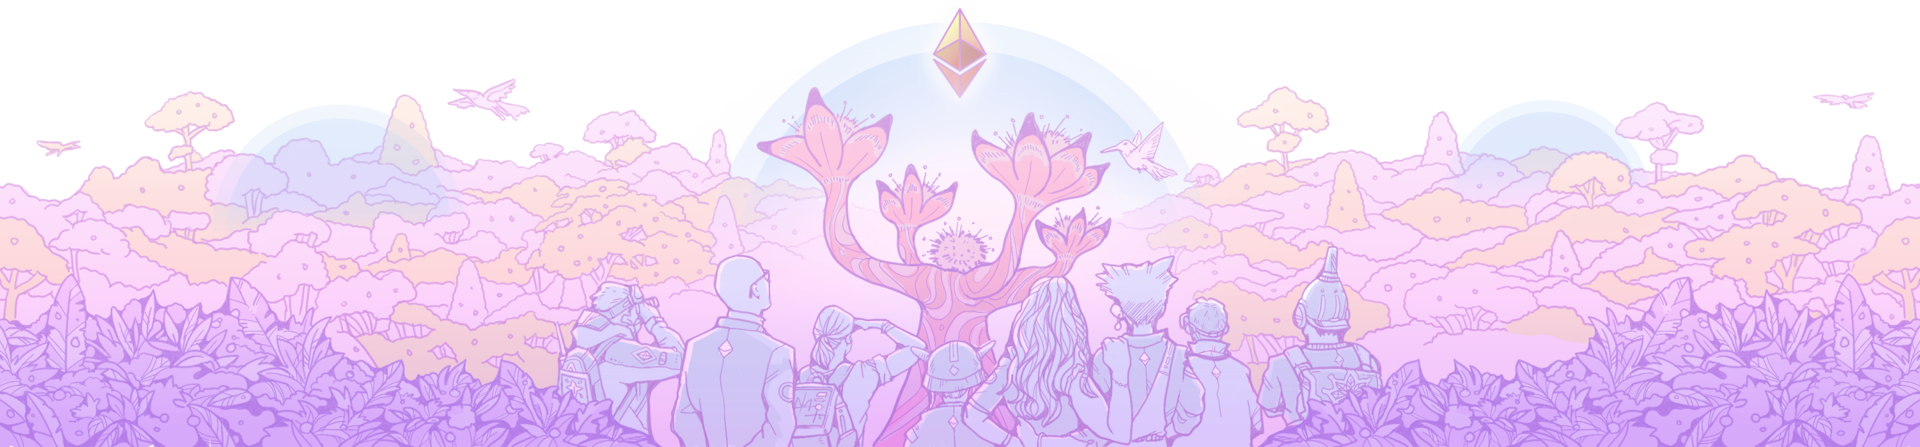 People gathered around the Ethereum tree